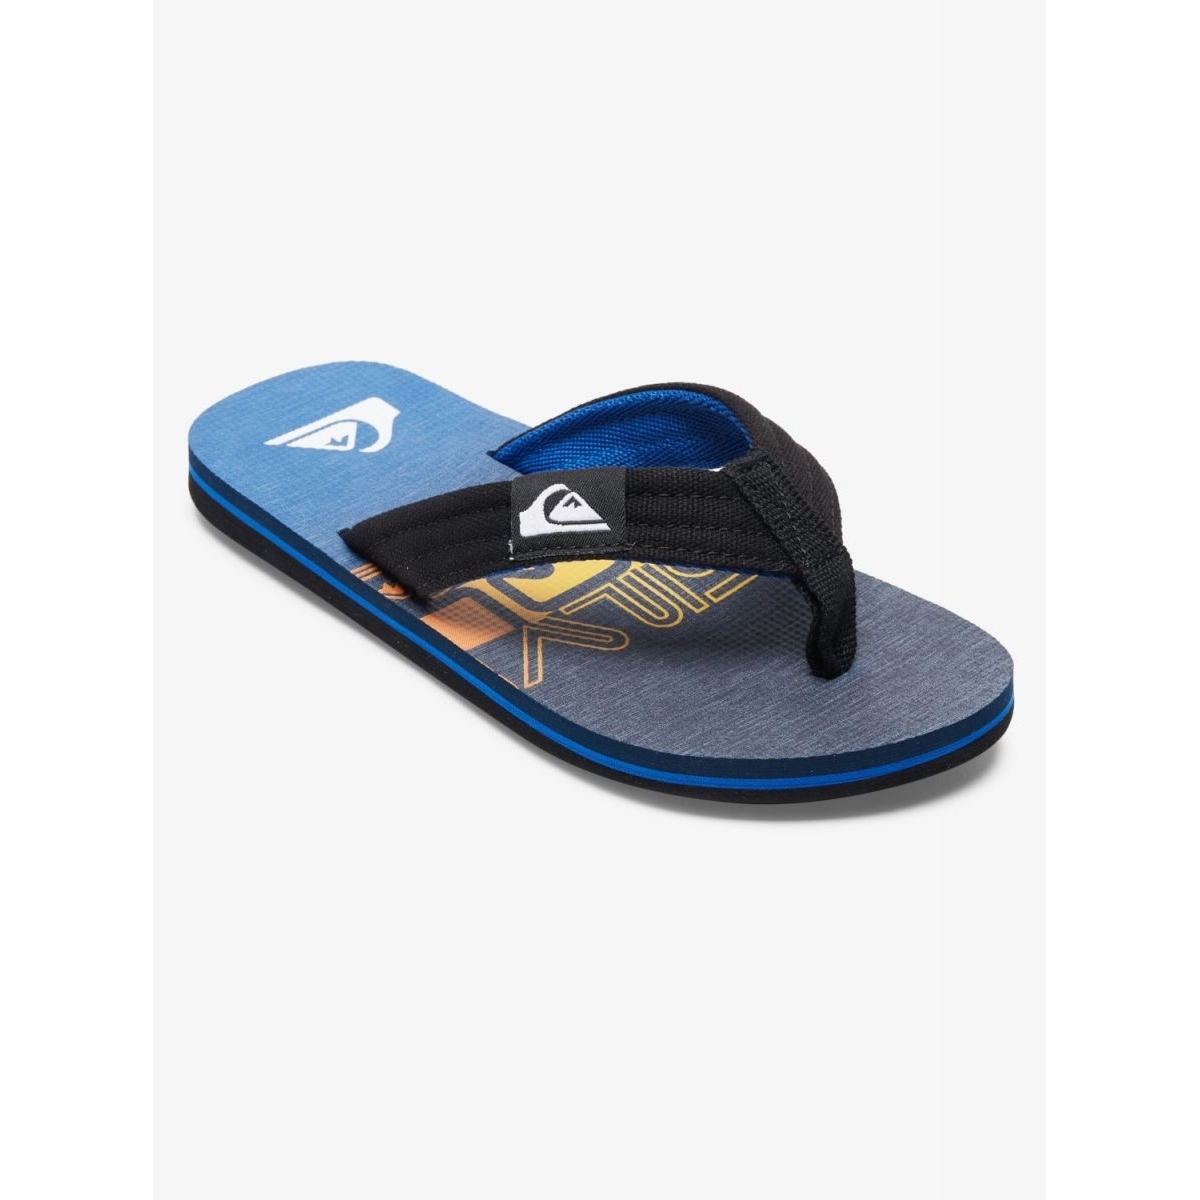 Quiksilver Boys' Molokai Layback Flip Flop Sandals Blue 6 - AQBL100591-BYJ6 BLUE 6 - BLUE 6, 11 Little Kid